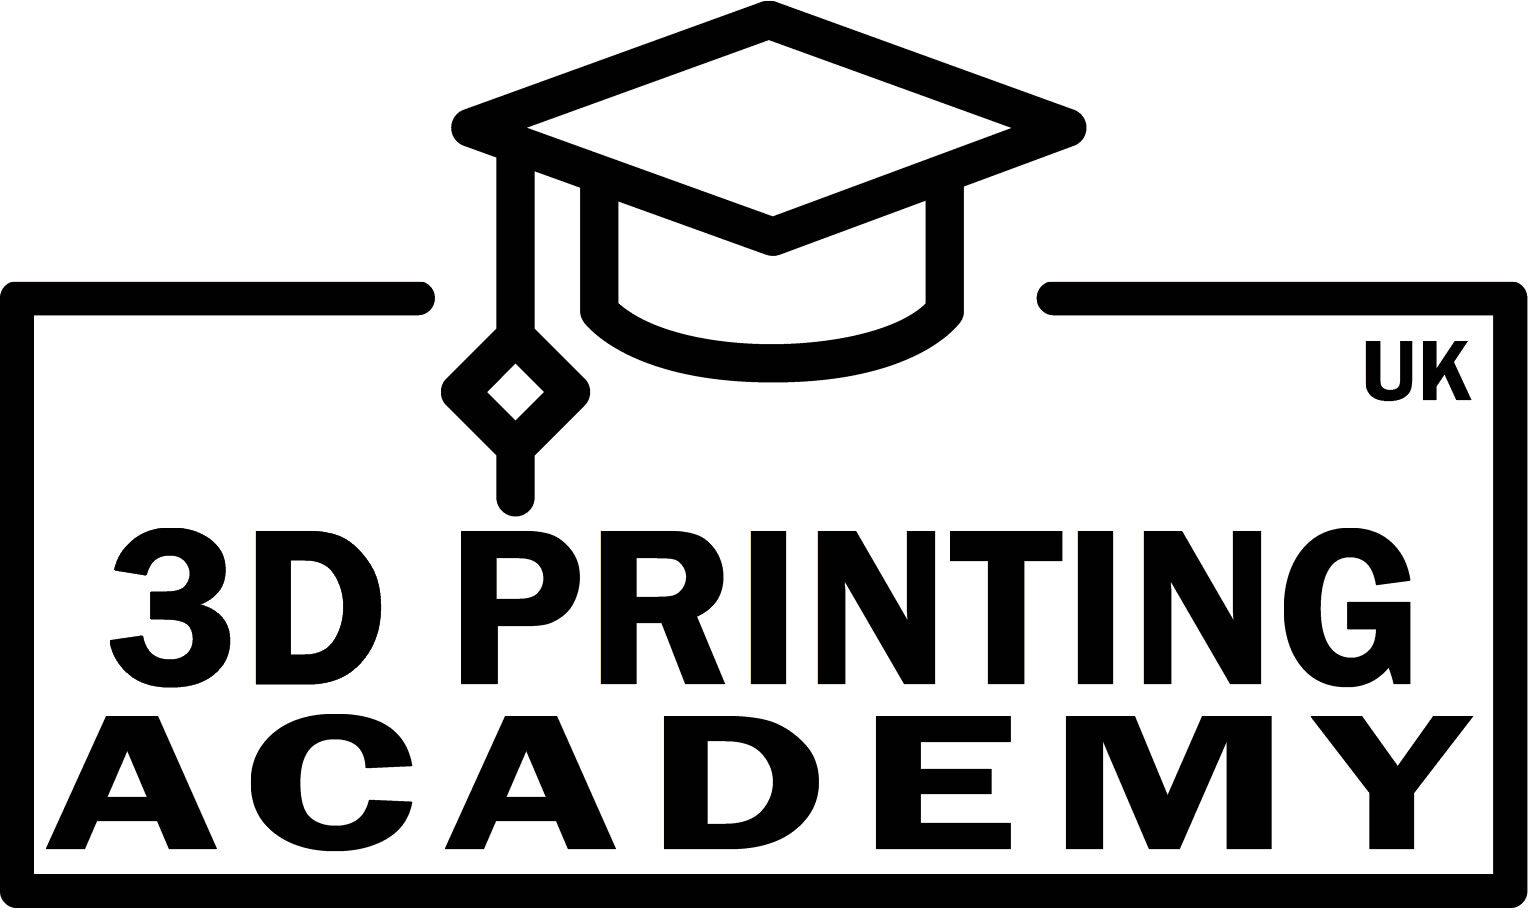 3D Printing Academy UK